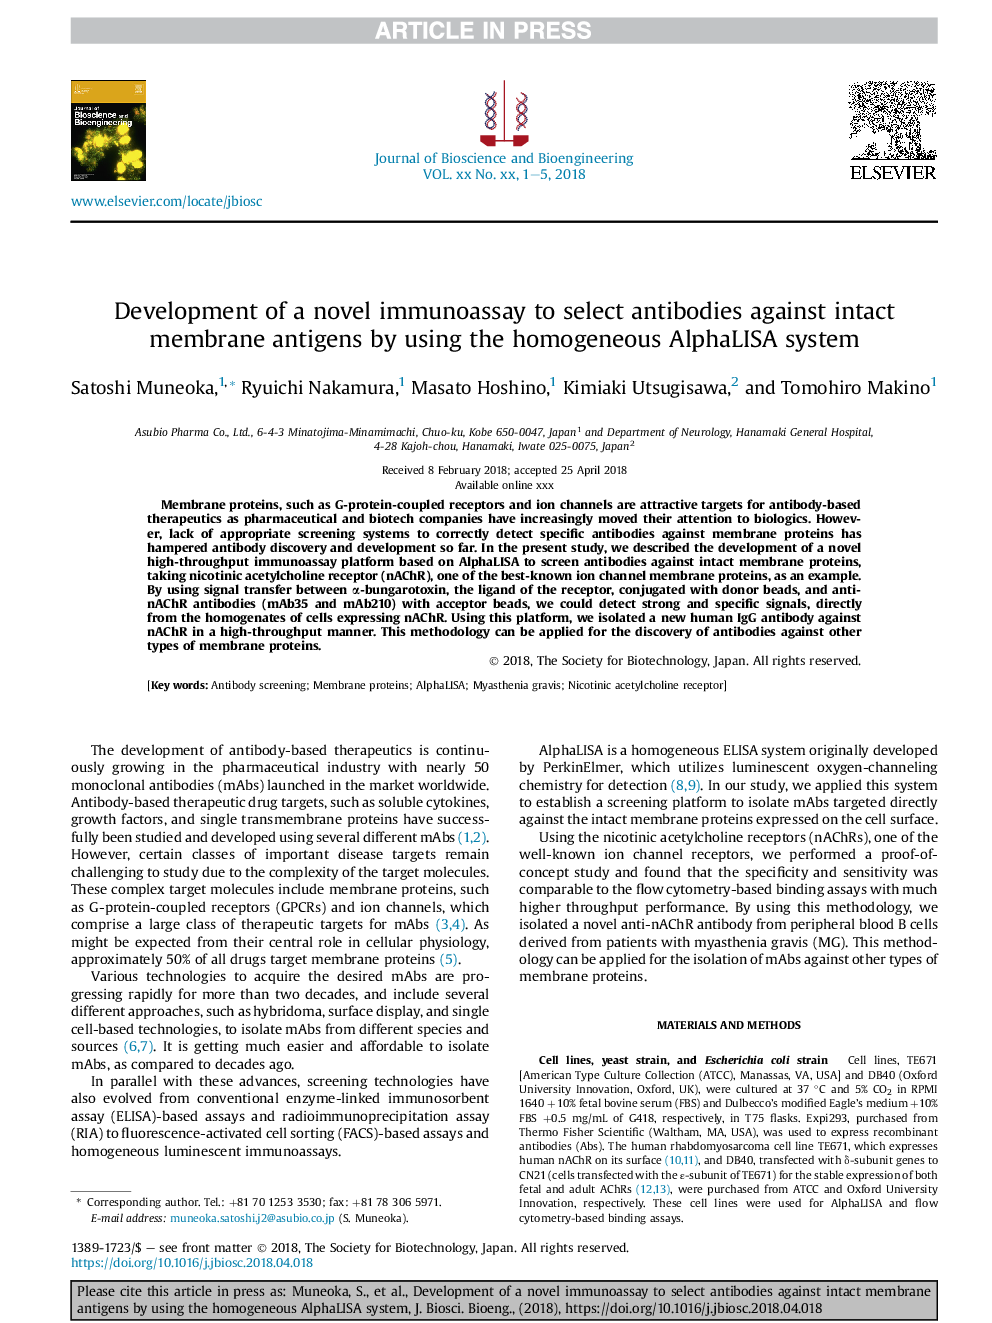 Development of a novel immunoassay to select antibodies against intact membrane antigens by using the homogeneous AlphaLISA system